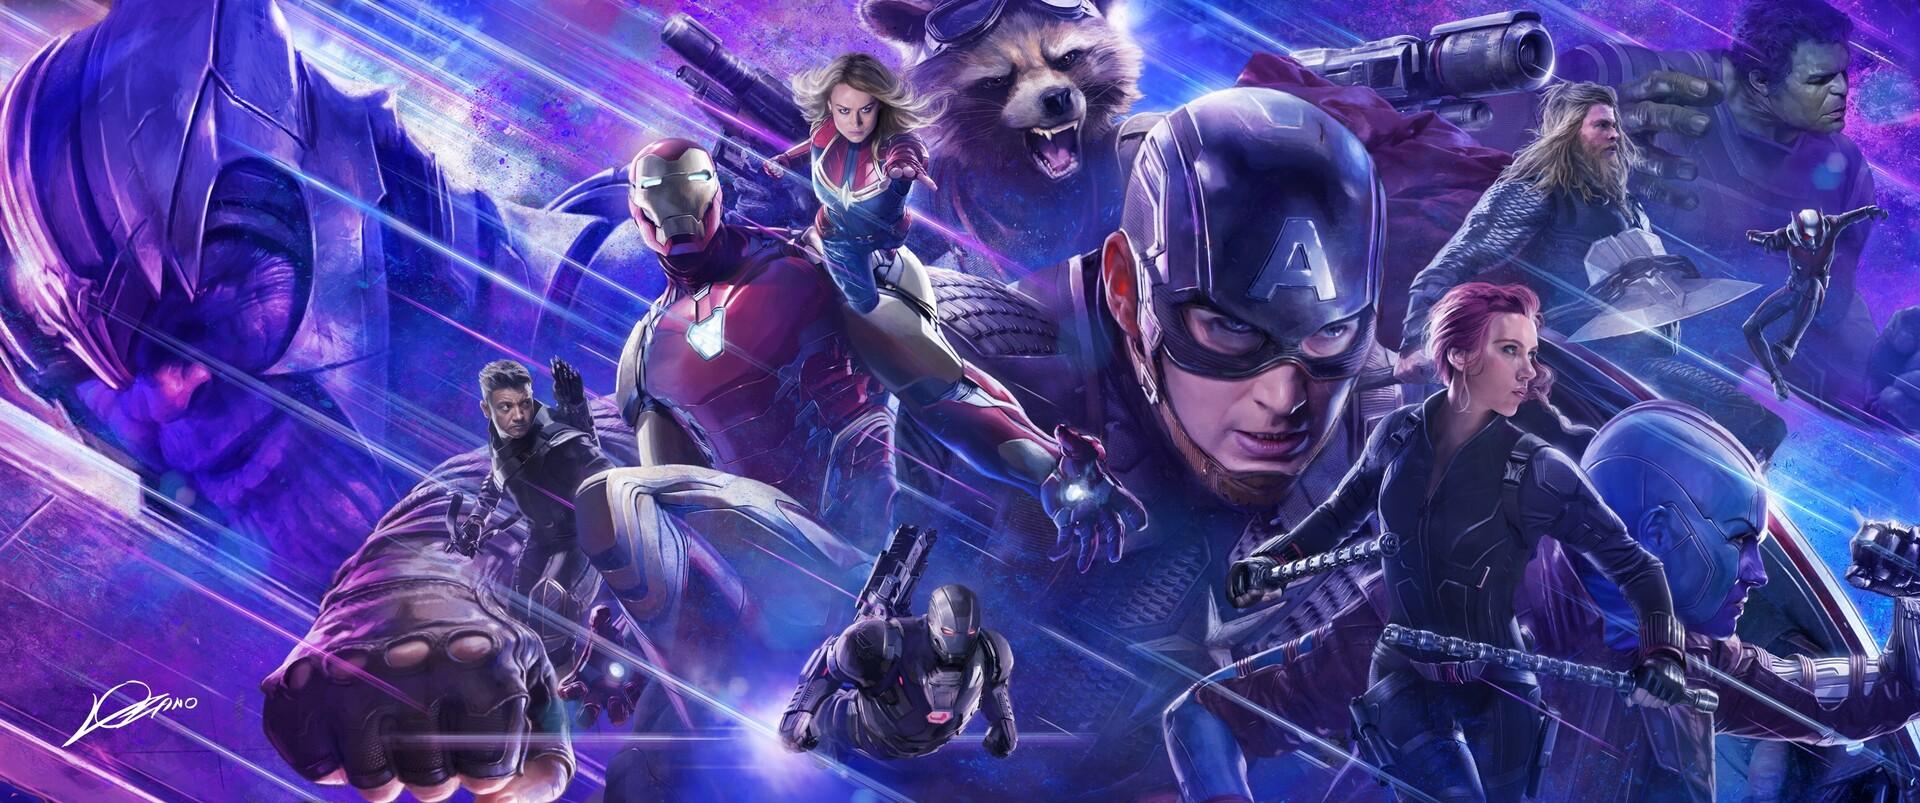 Amazing Avengers Endgame Poster